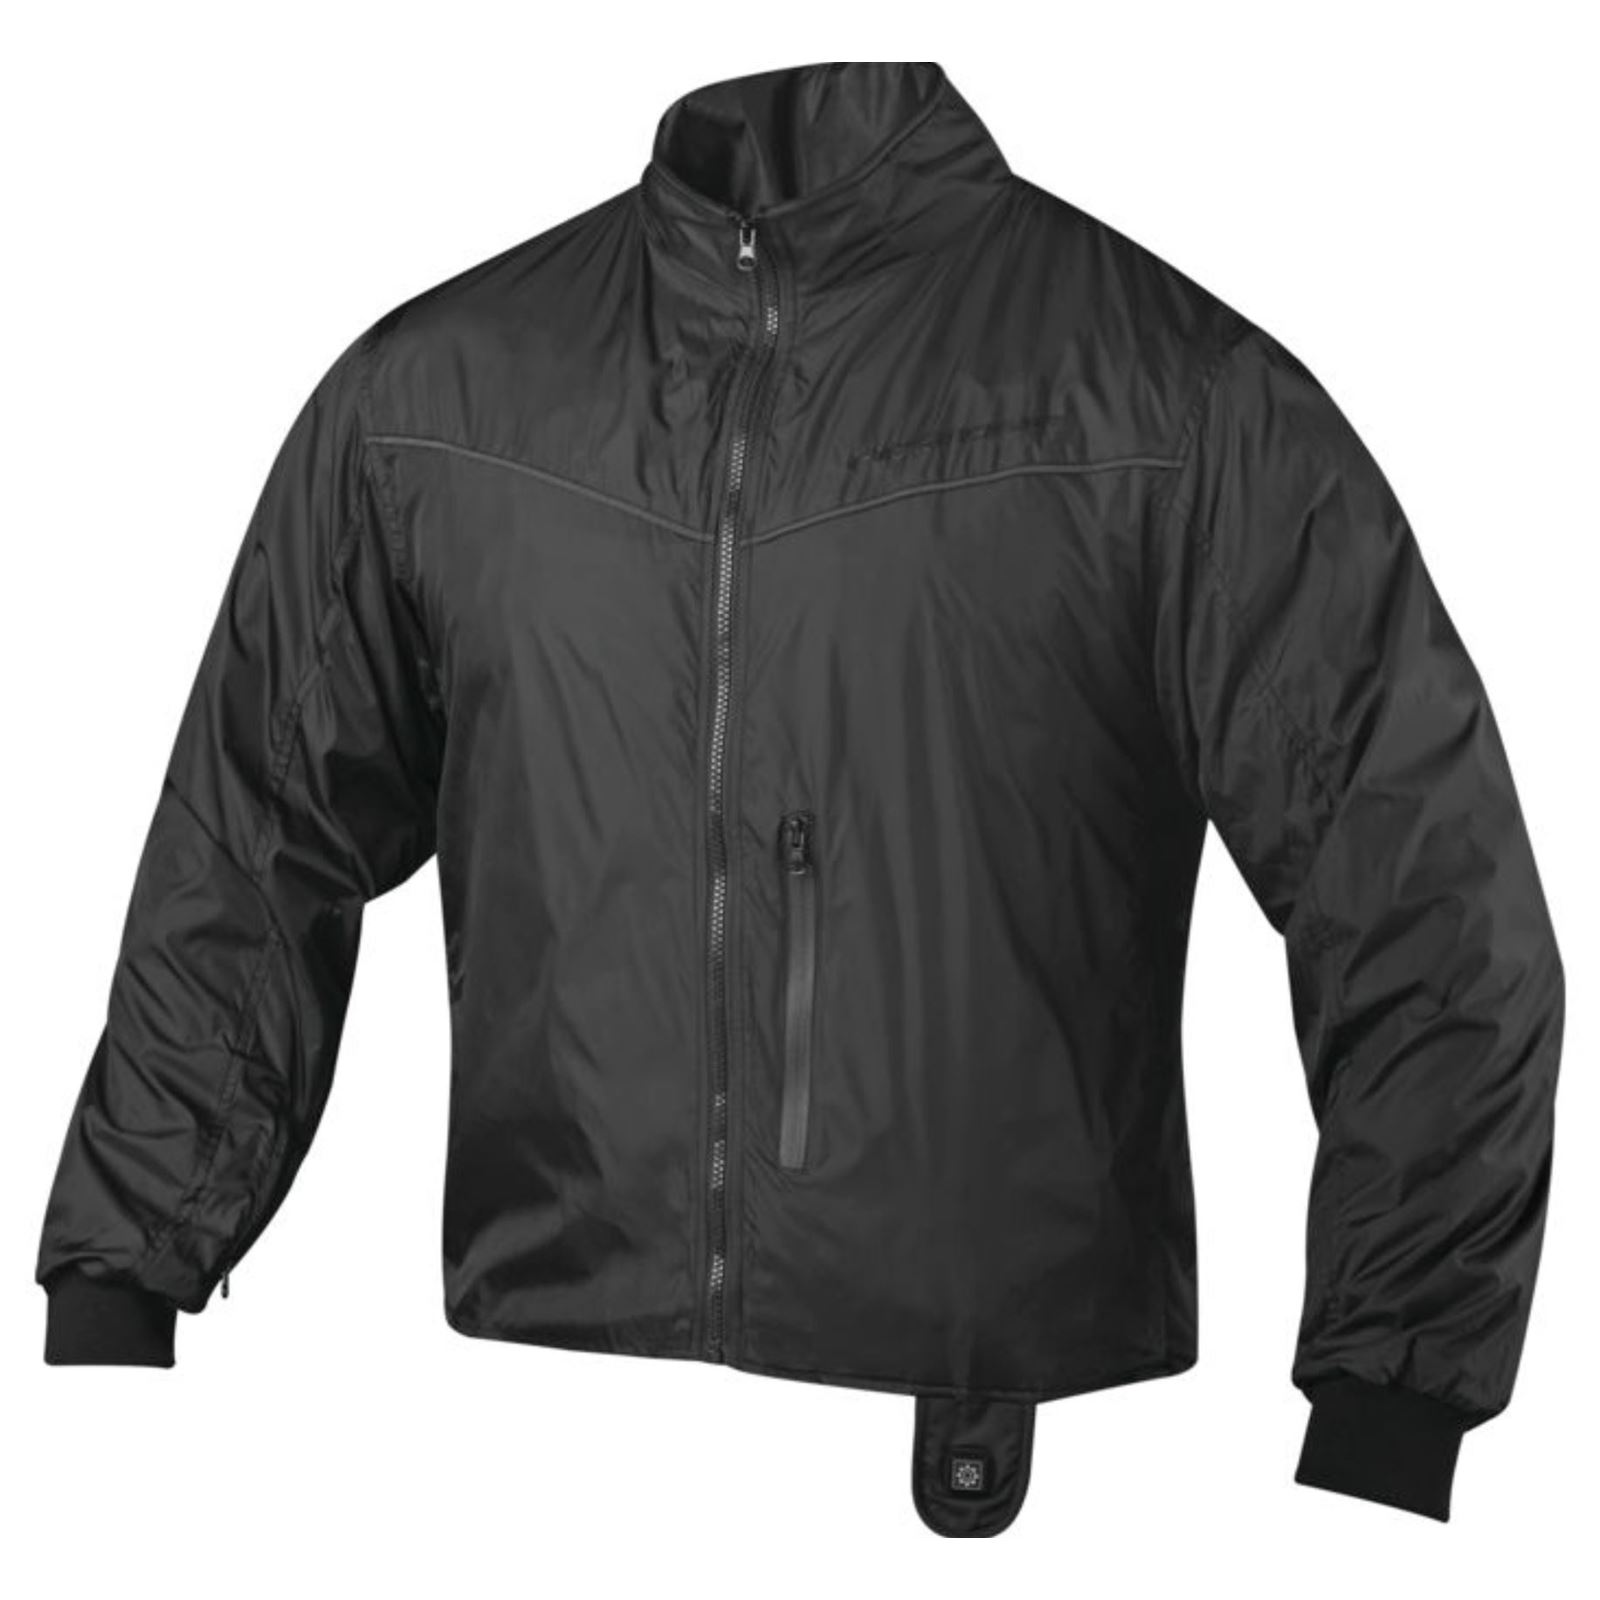 Firstgear 12V/42W Heated Jacket Liner - Black - Women's 2X-Large